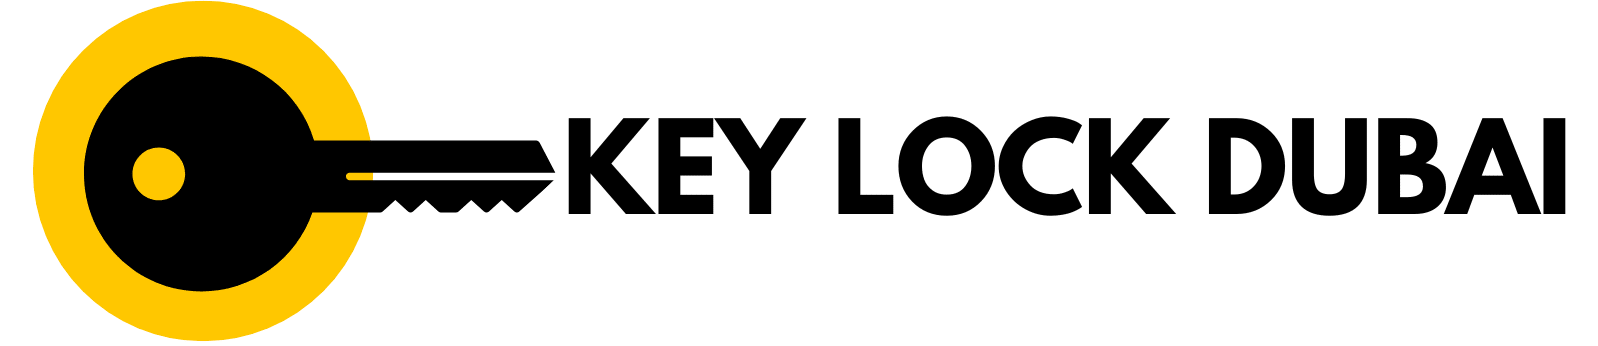 key lock Dubai locksmith website logo